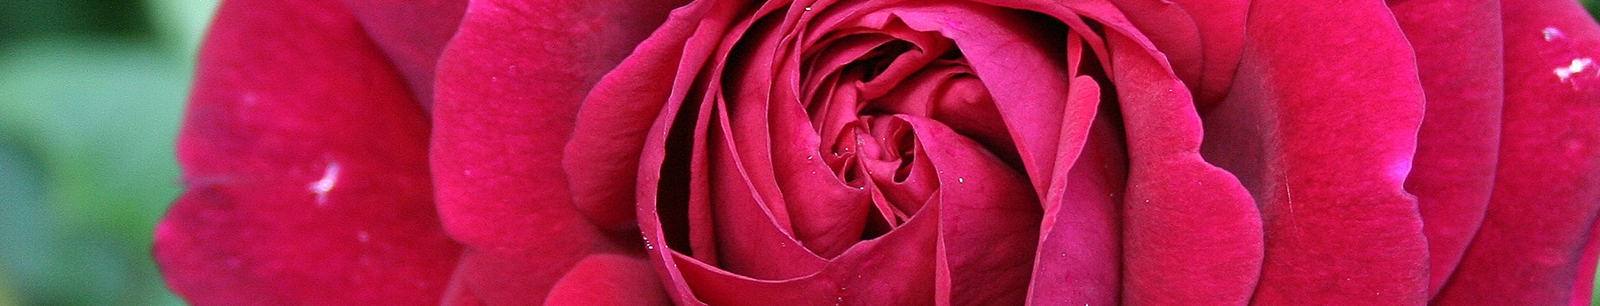 Rose banner